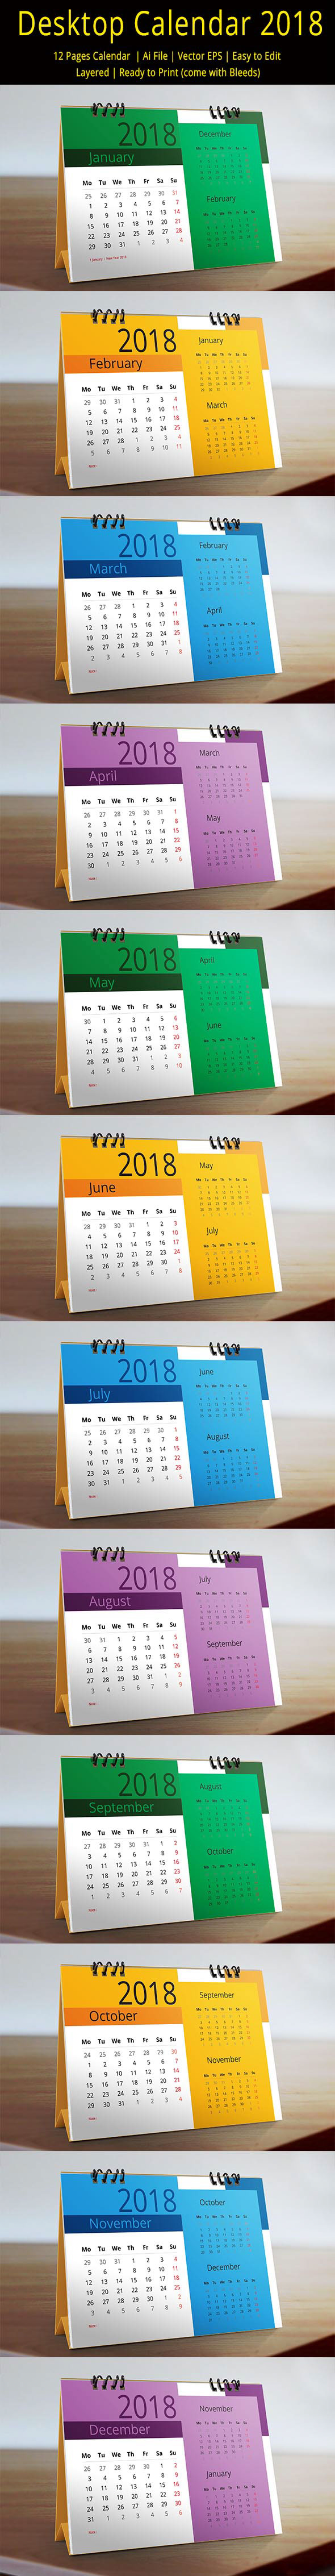 desk calendar free calendar template business calendar template Office Promotion Stationery Desk Calendar 2018 calendar 2018